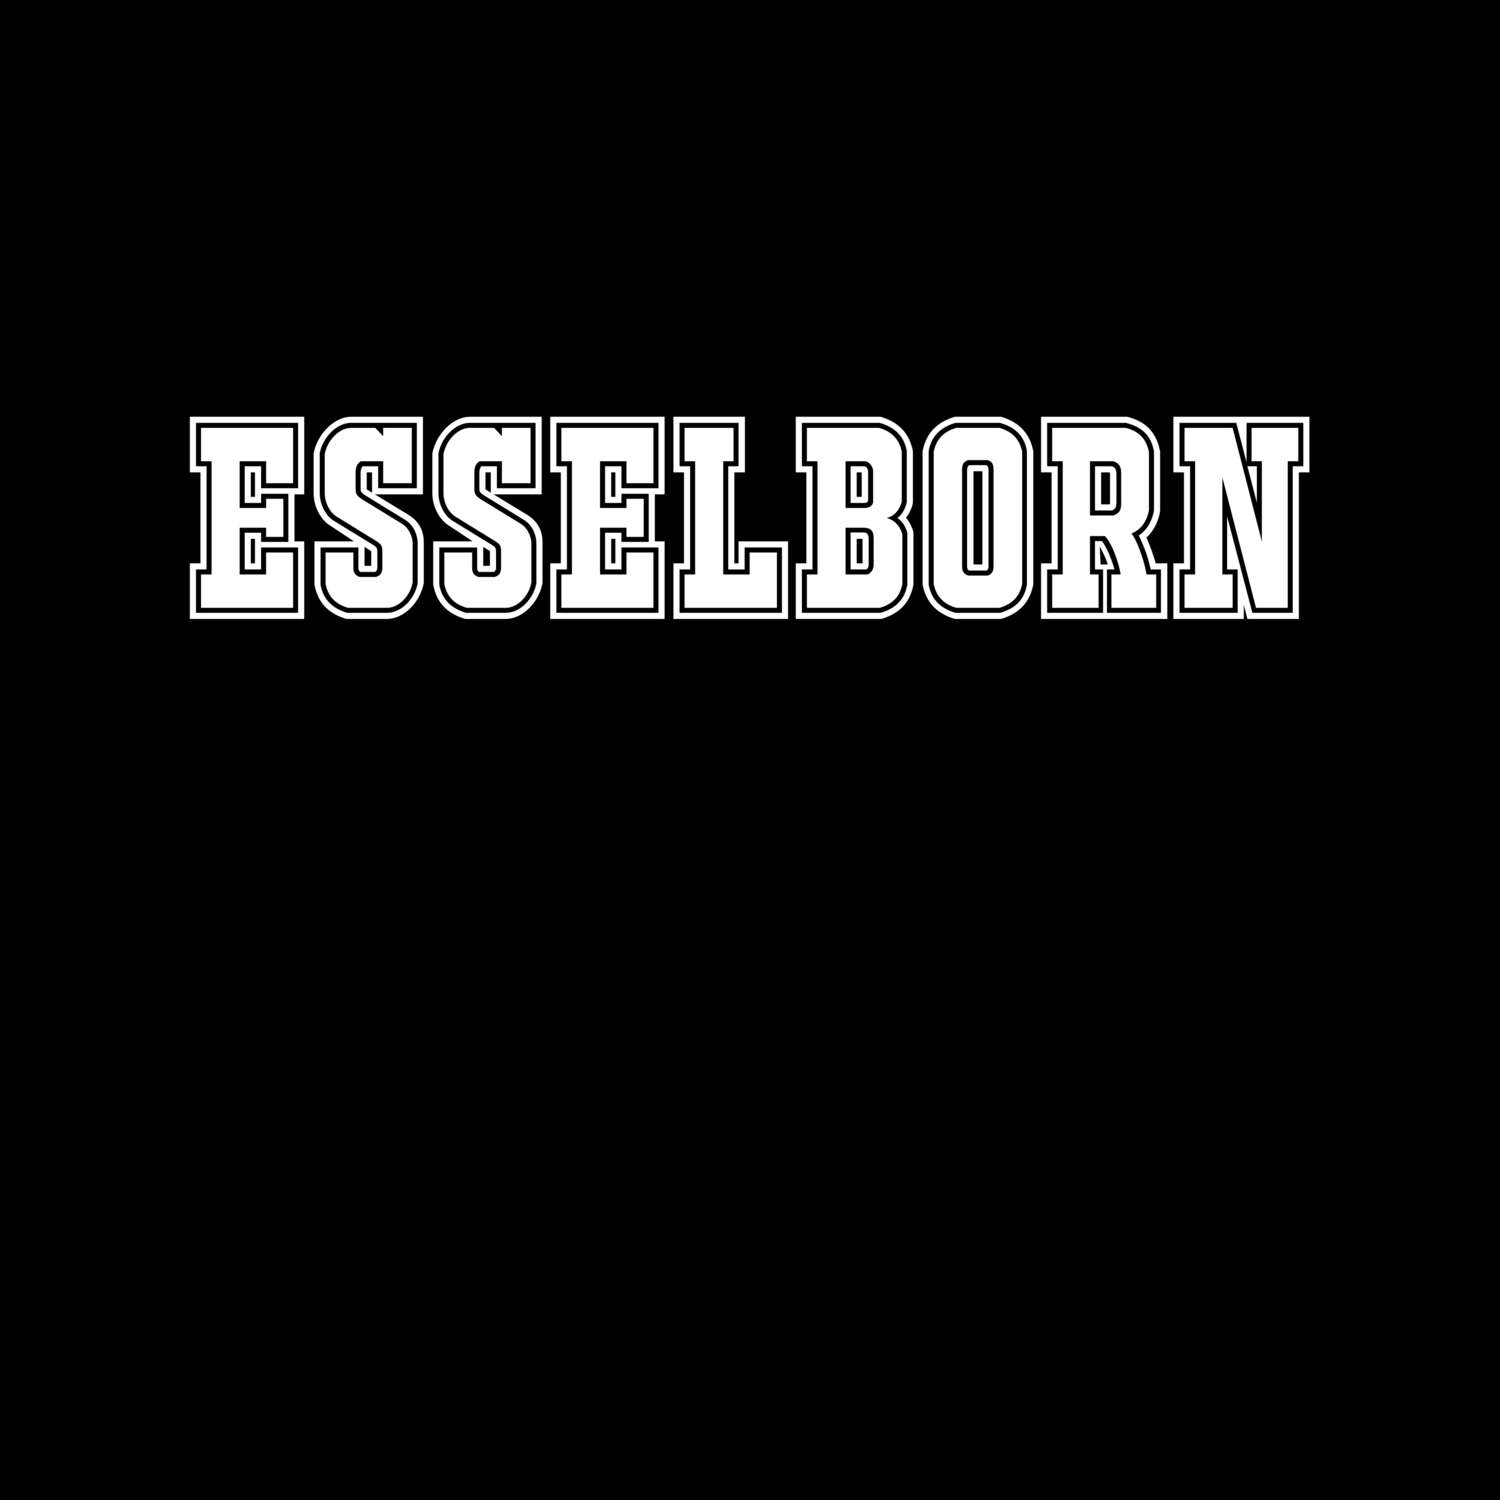 Esselborn T-Shirt »Classic«